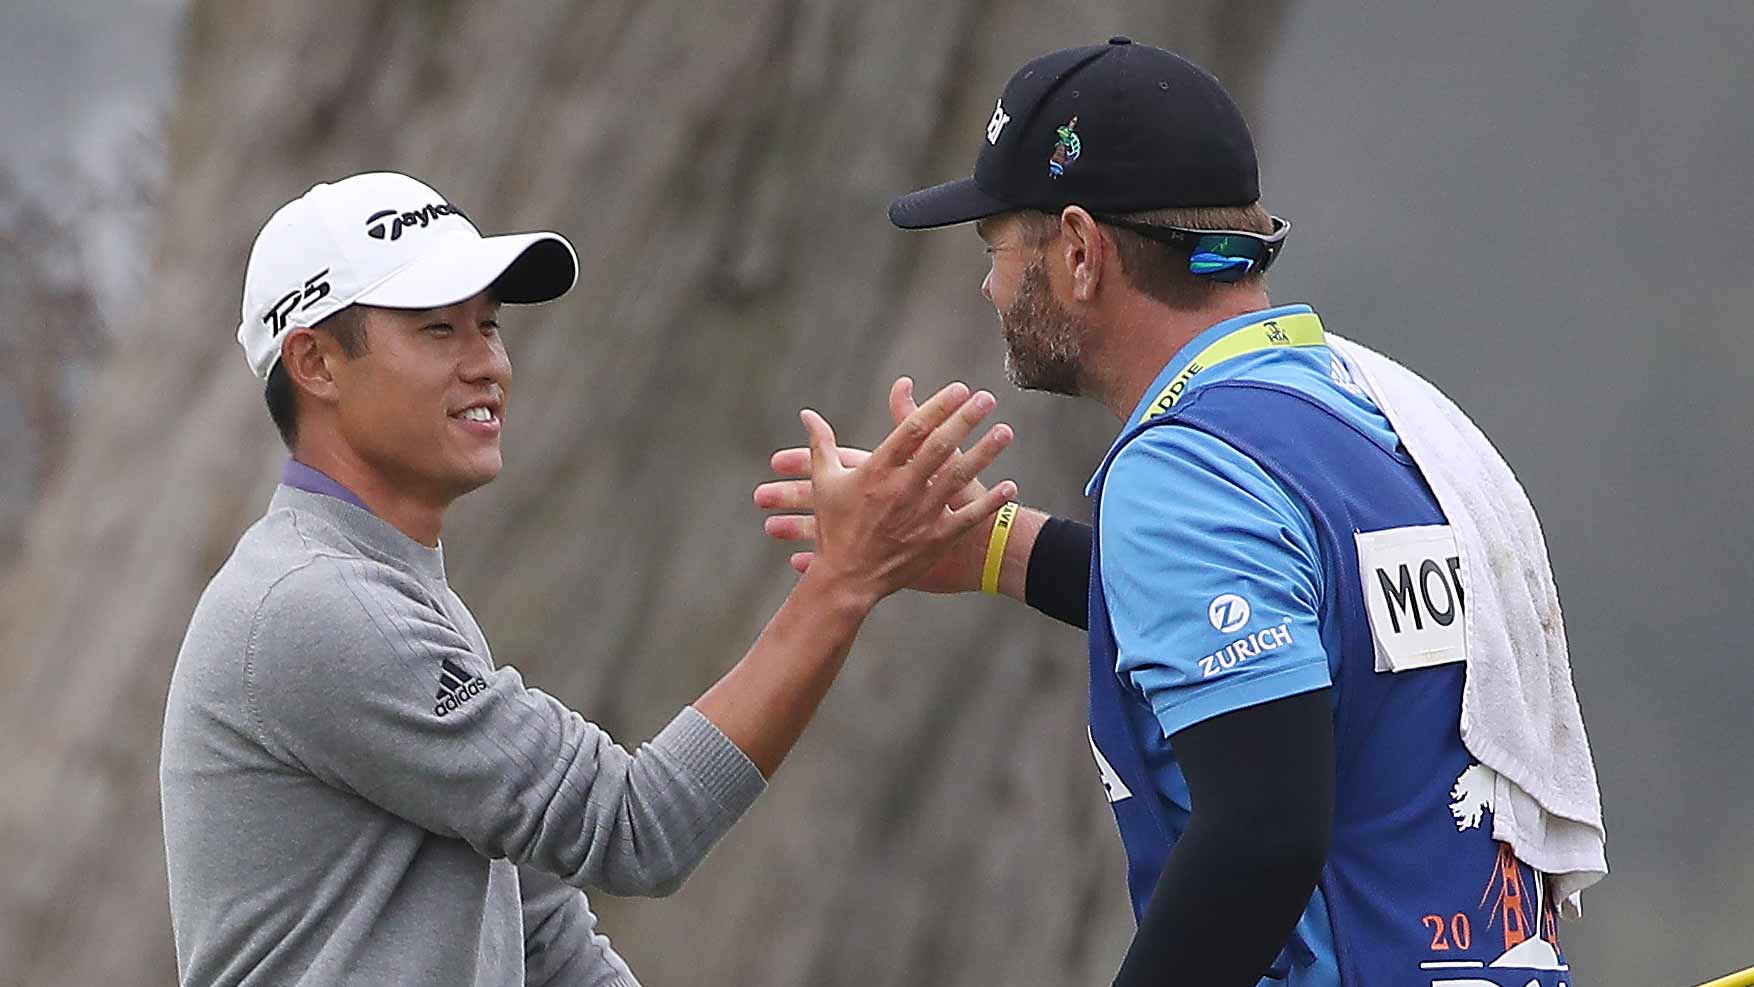 Collin Morikawa’s joyous PGA Championship win perfect antidote for 2020